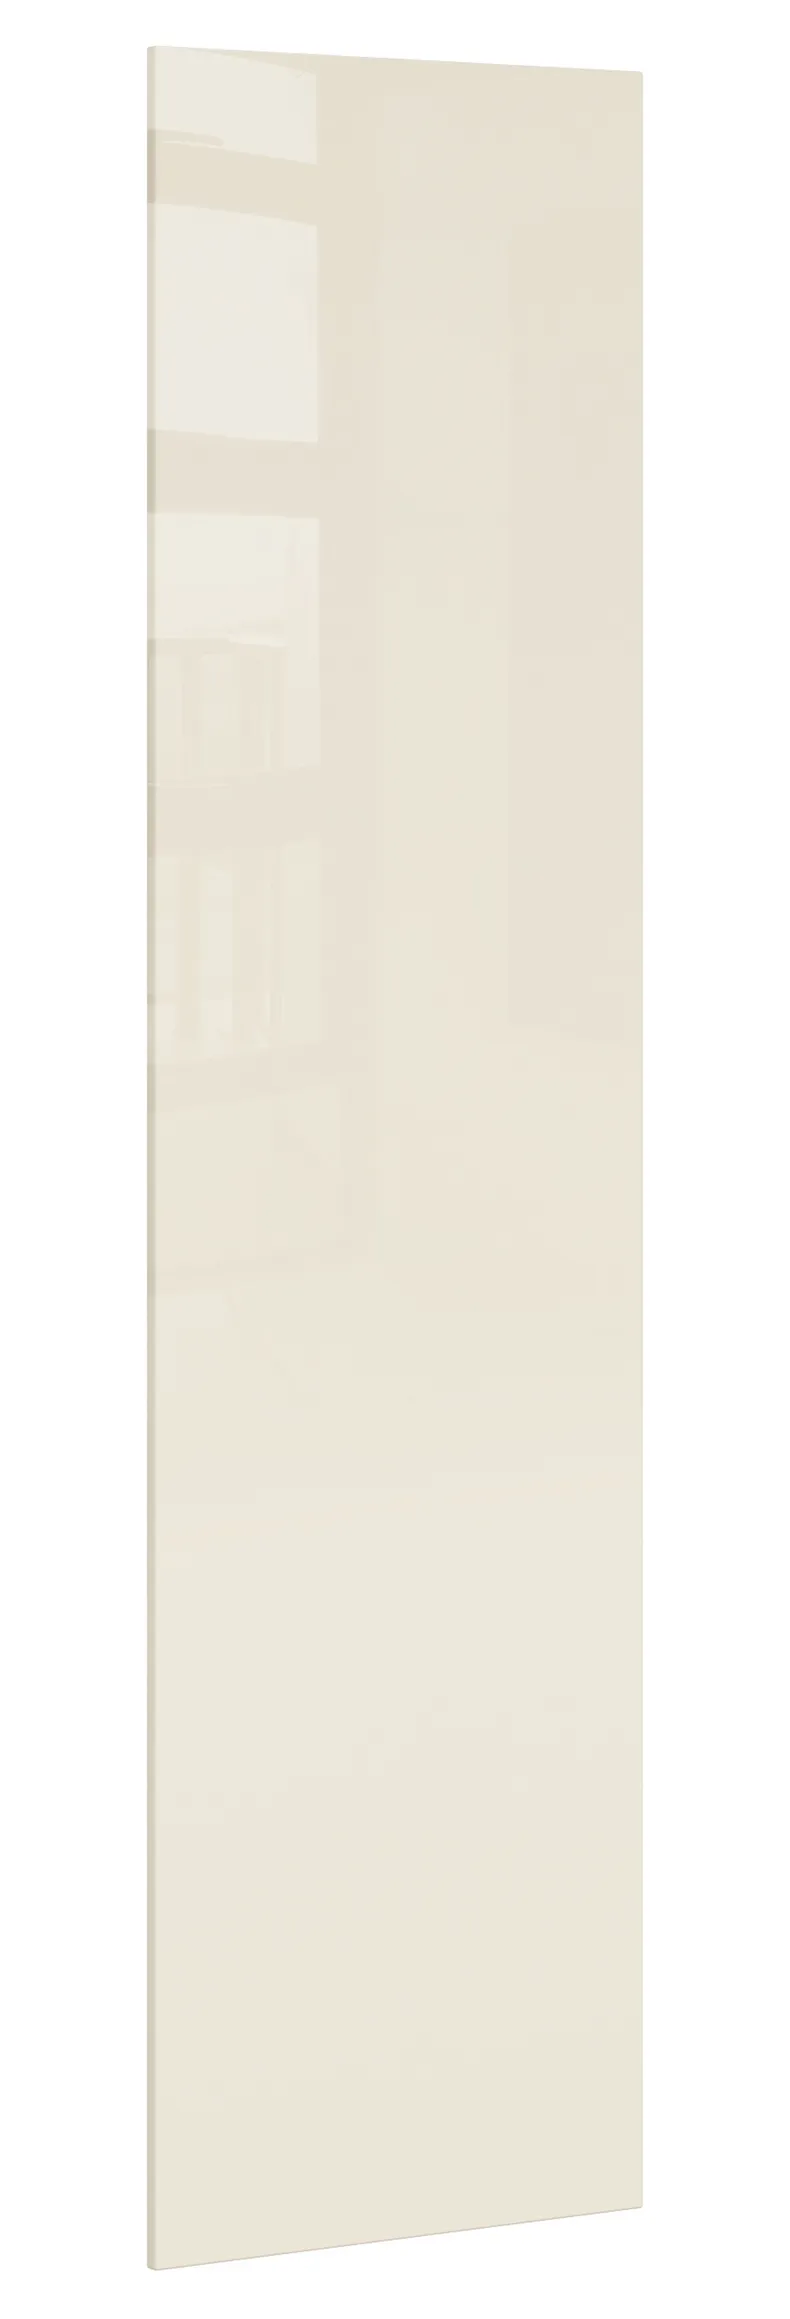 BRW Боковая панель Sole L6 220 см magnlia pearl, альпийский белый/жемчуг магнолии FM_PA_D_/220-MAPE фото №2